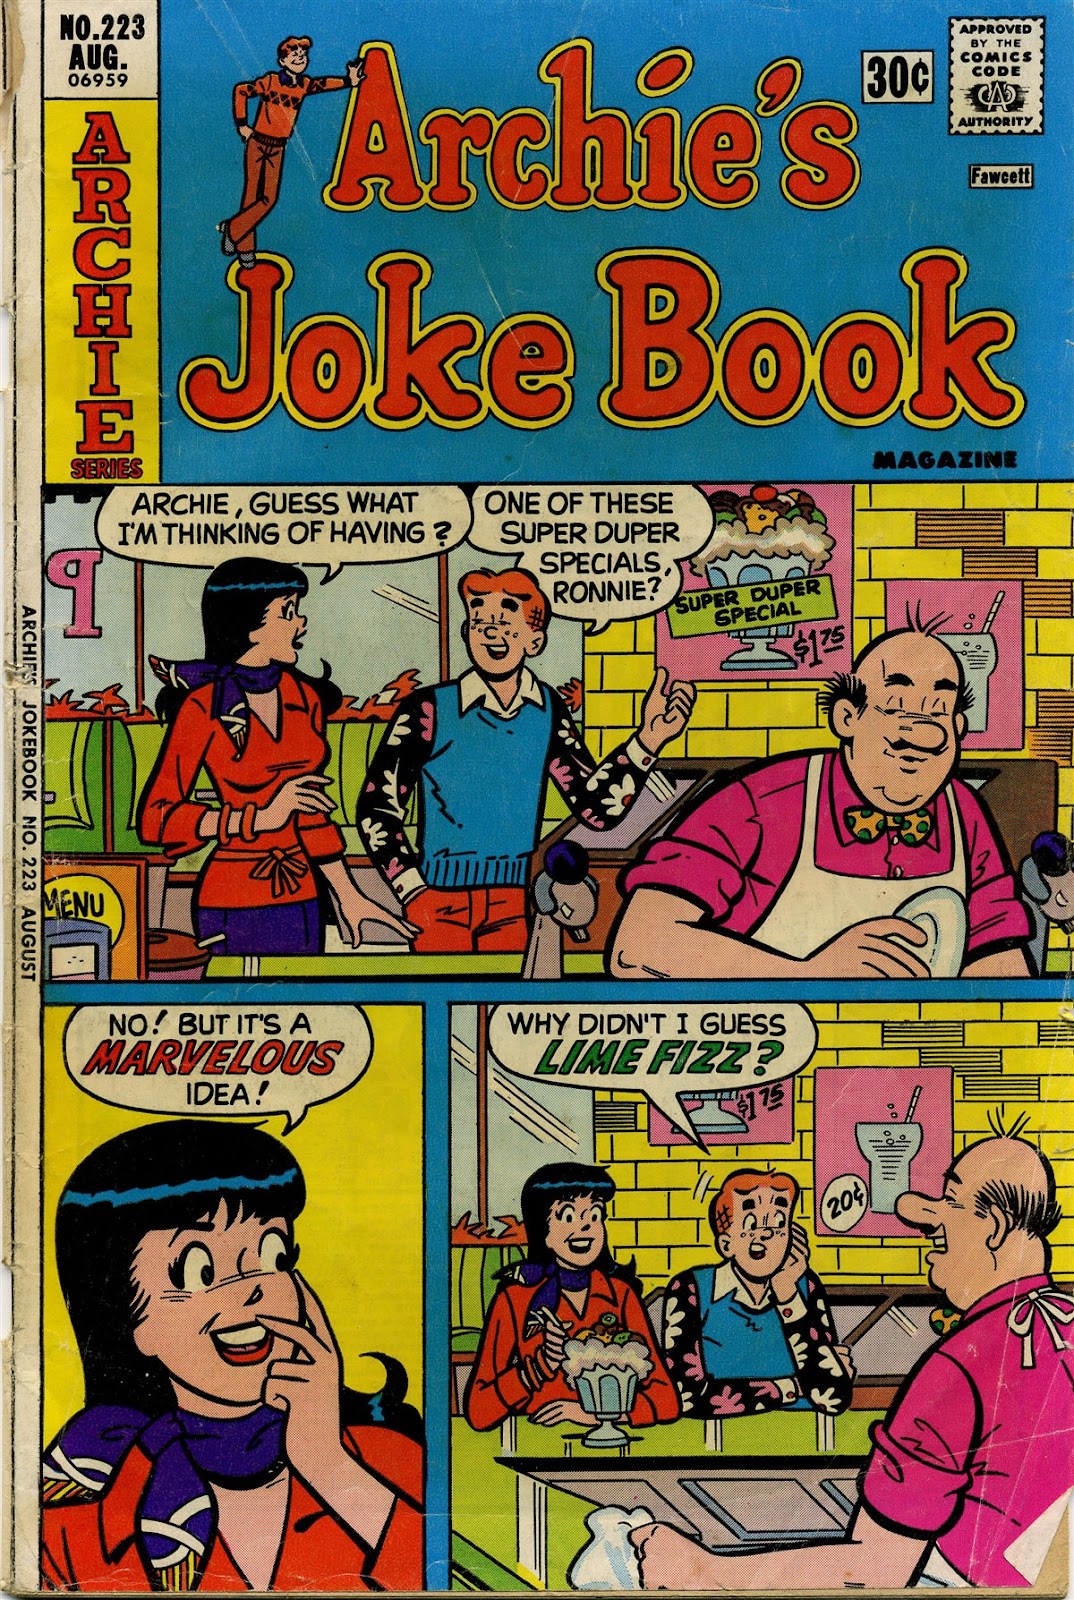 Archie's Joke Book Magazine issue 223 - Page 1